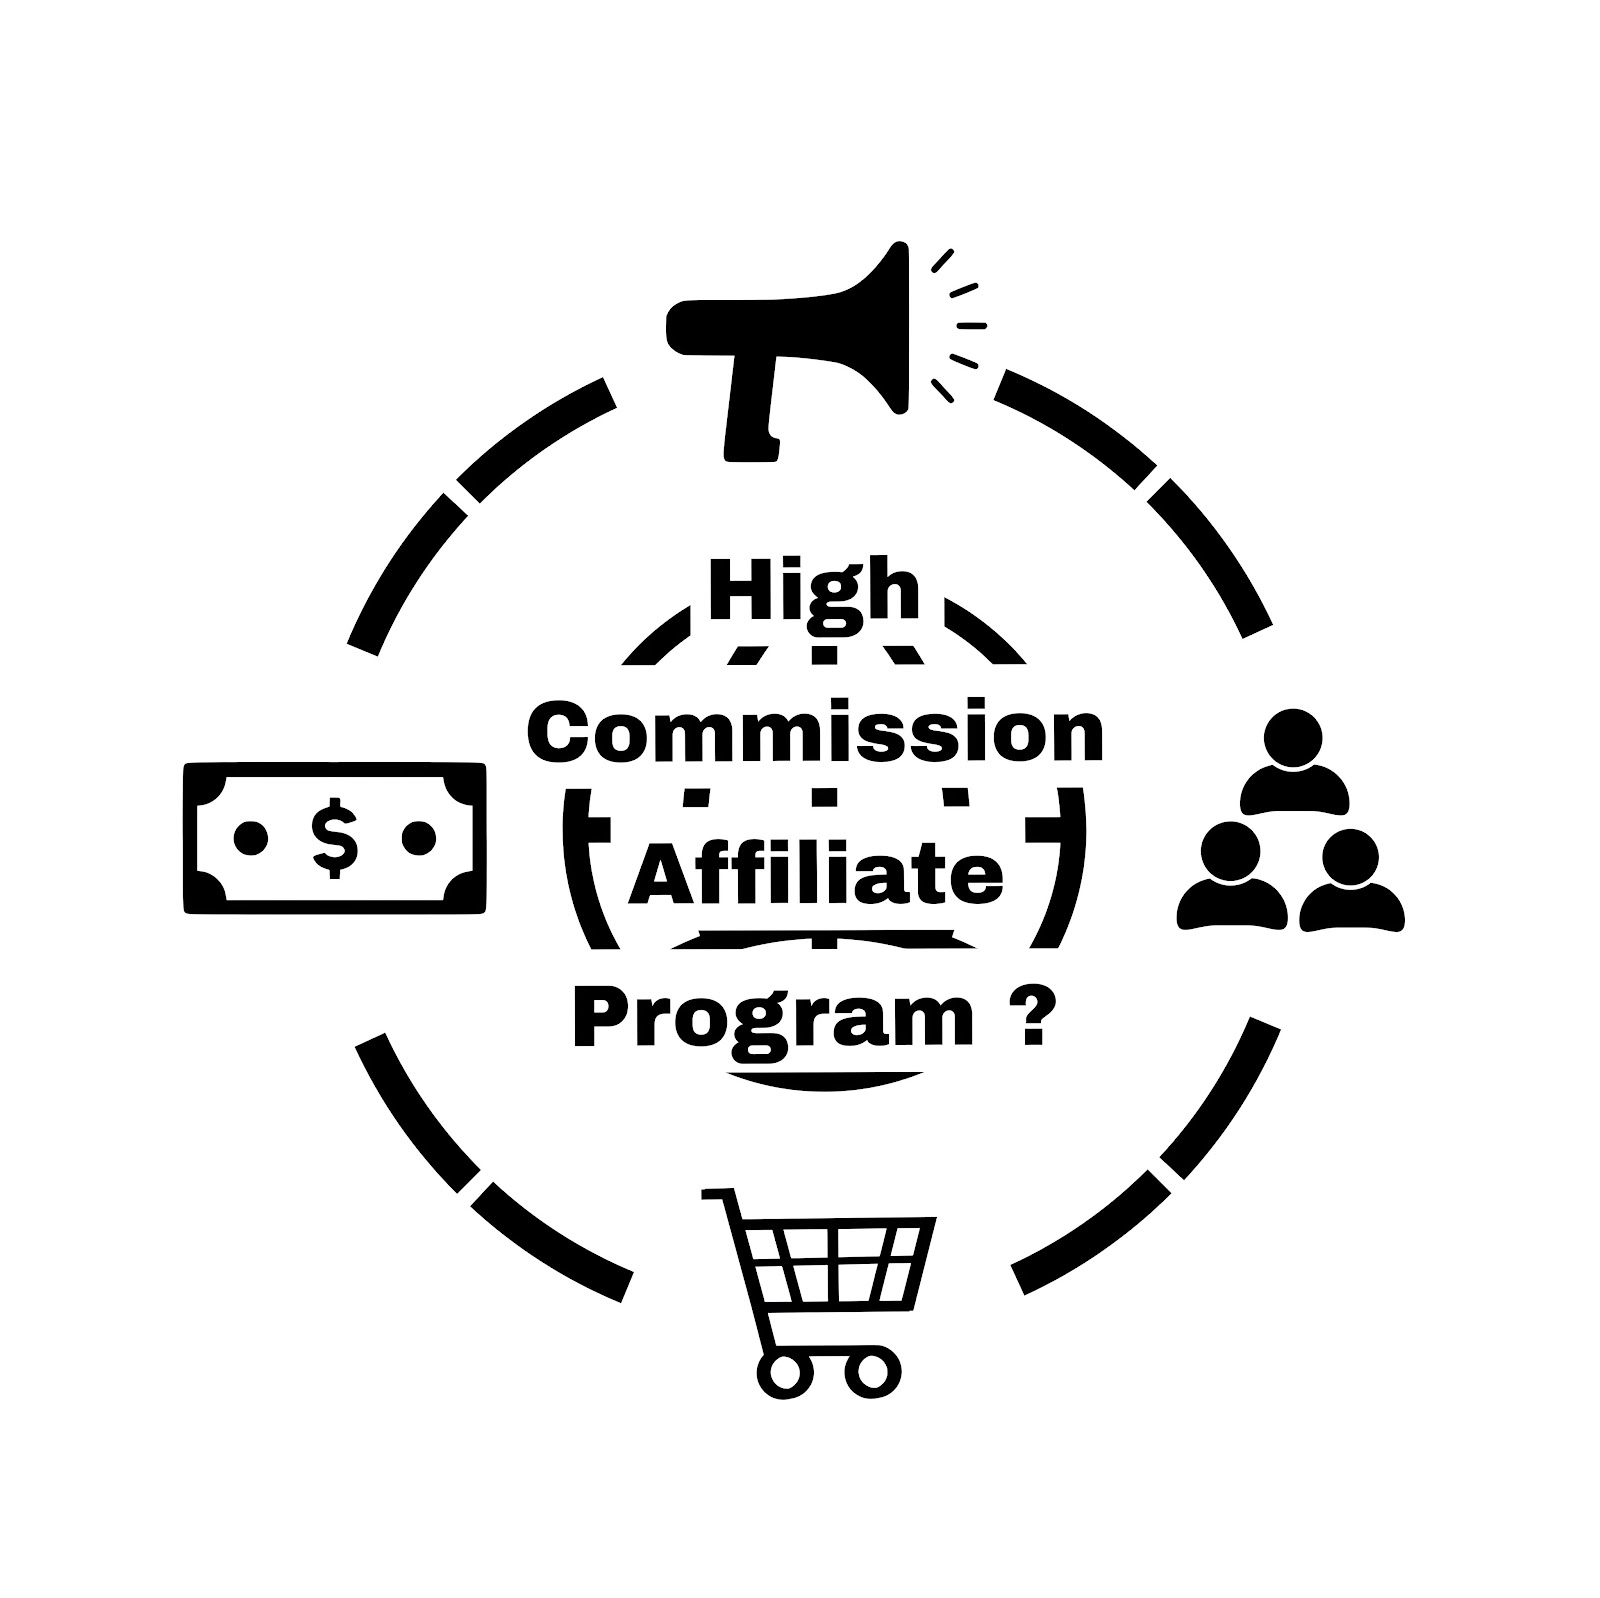 High Commission Affiliate Program ?